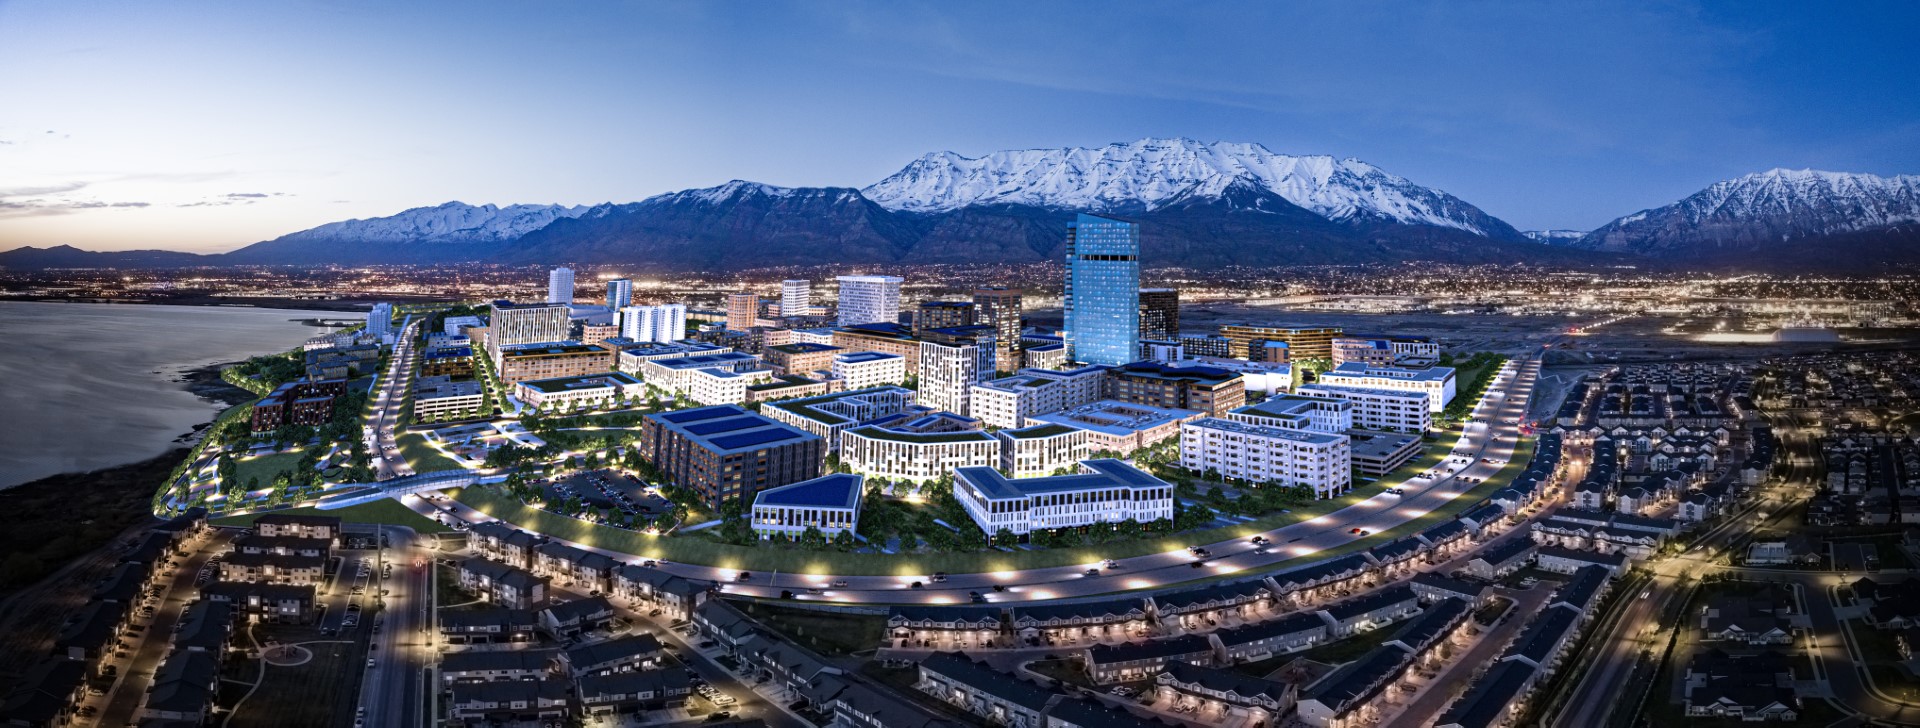 Utah City new Utah County development...